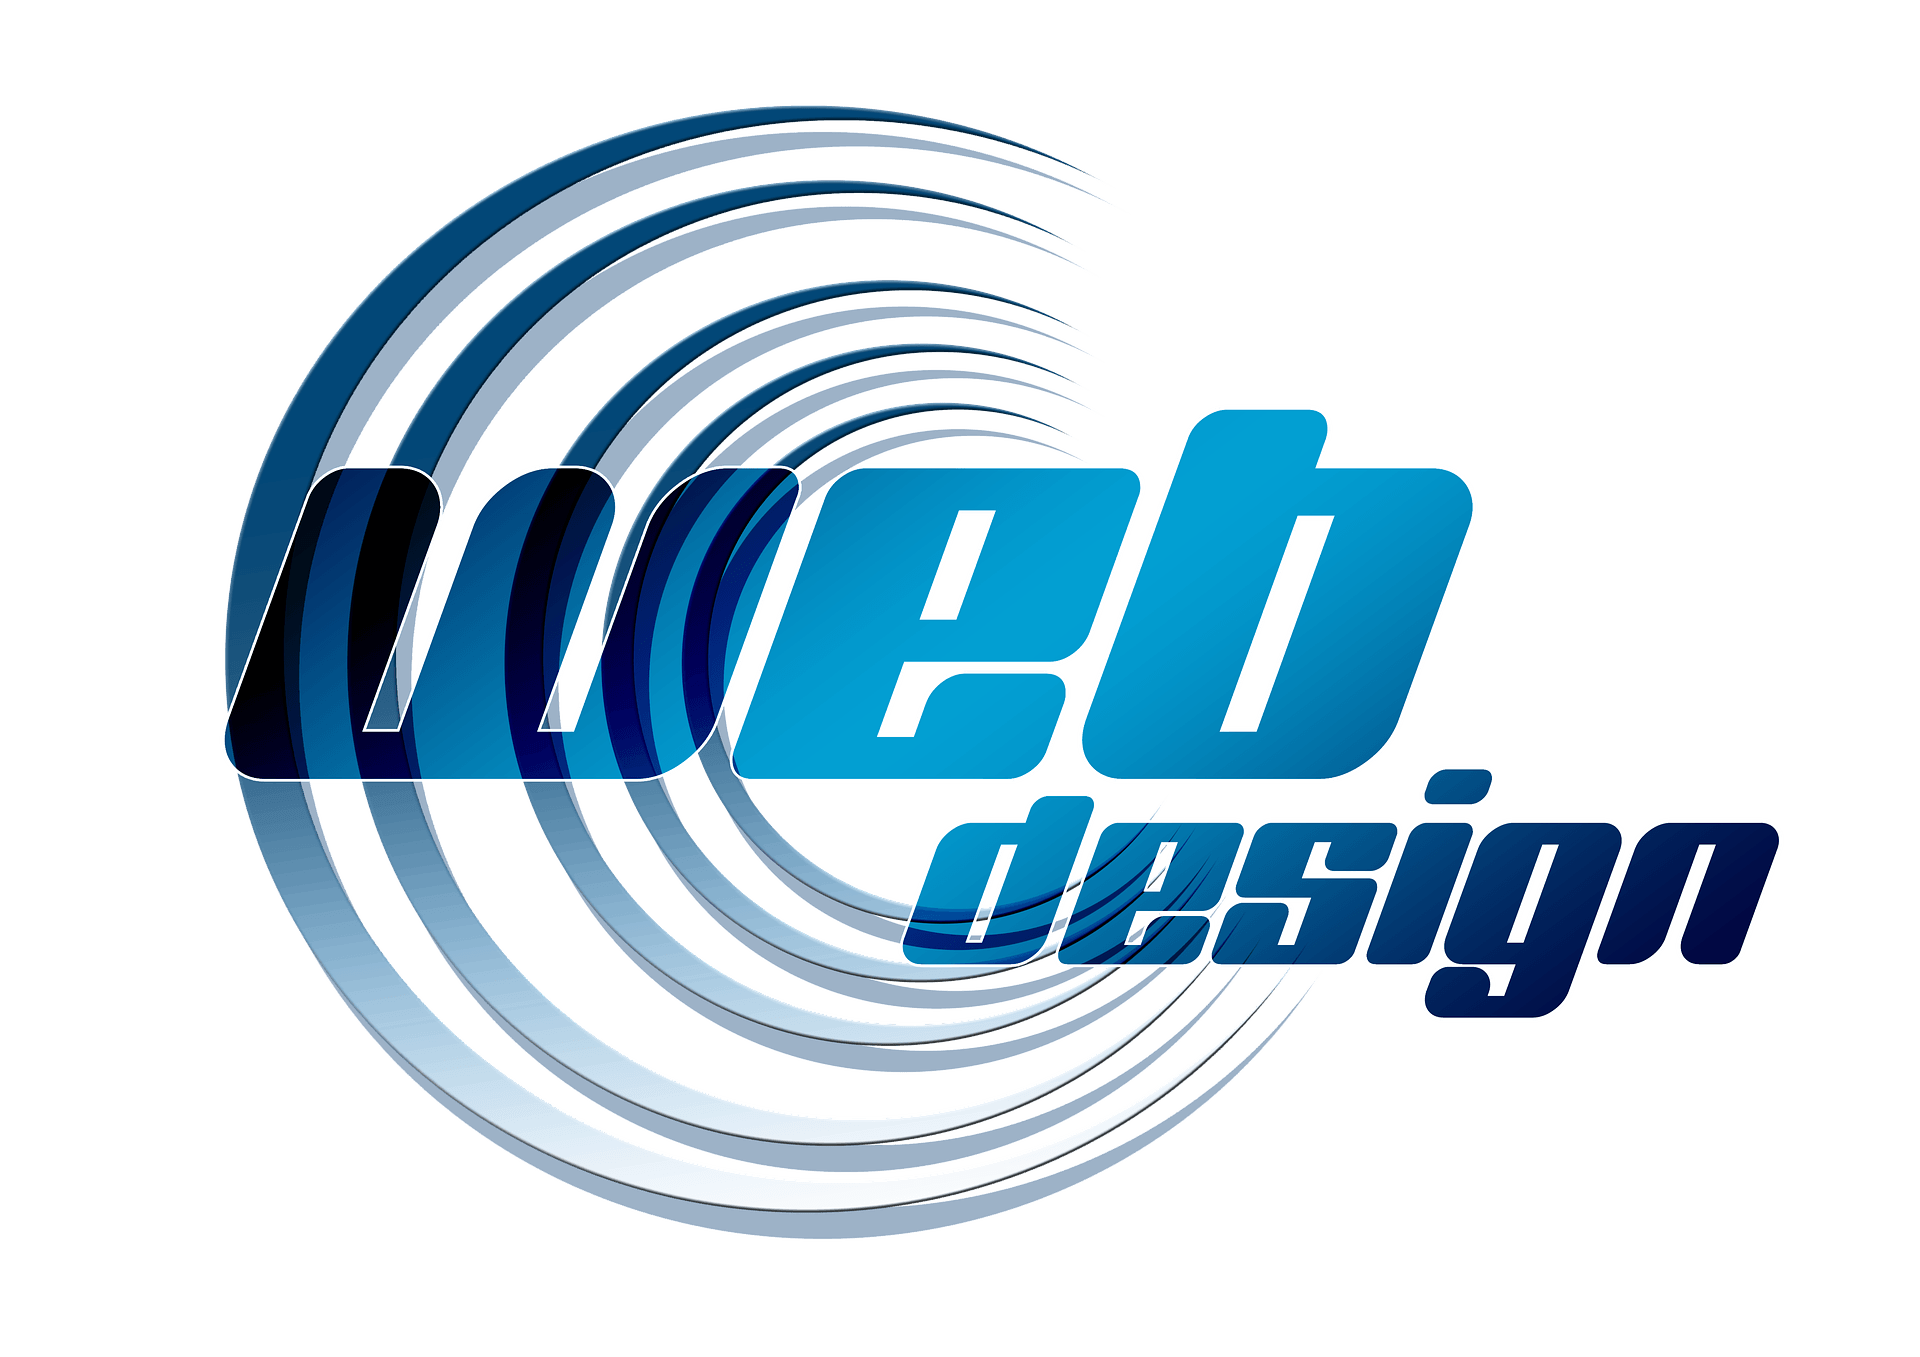 onewebdesign.png